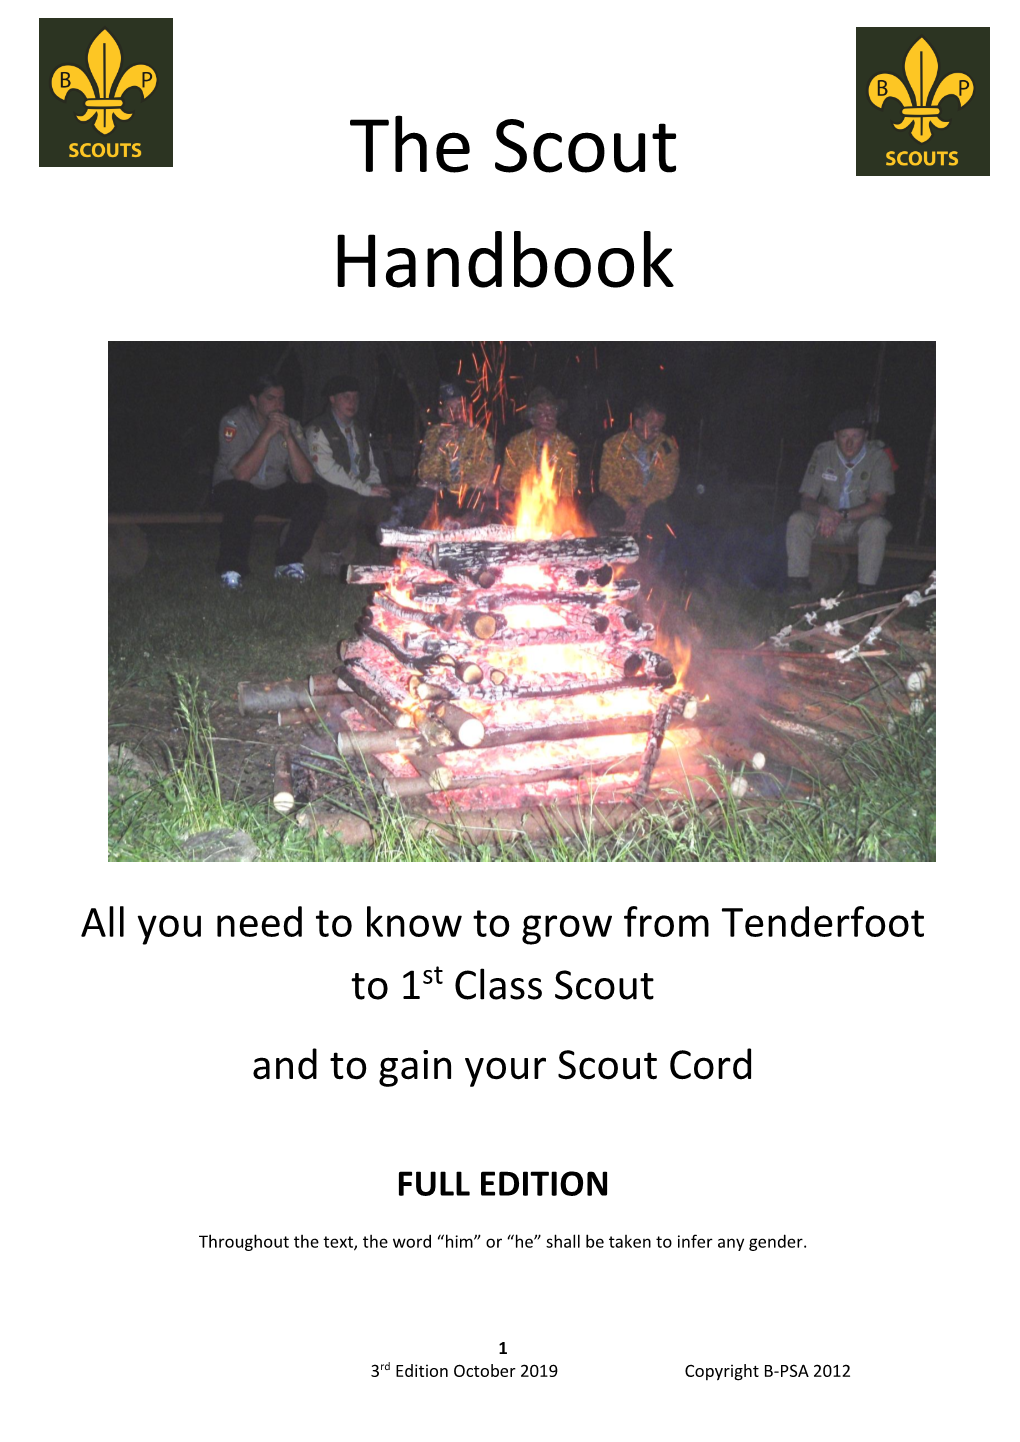 The Scout Handbook